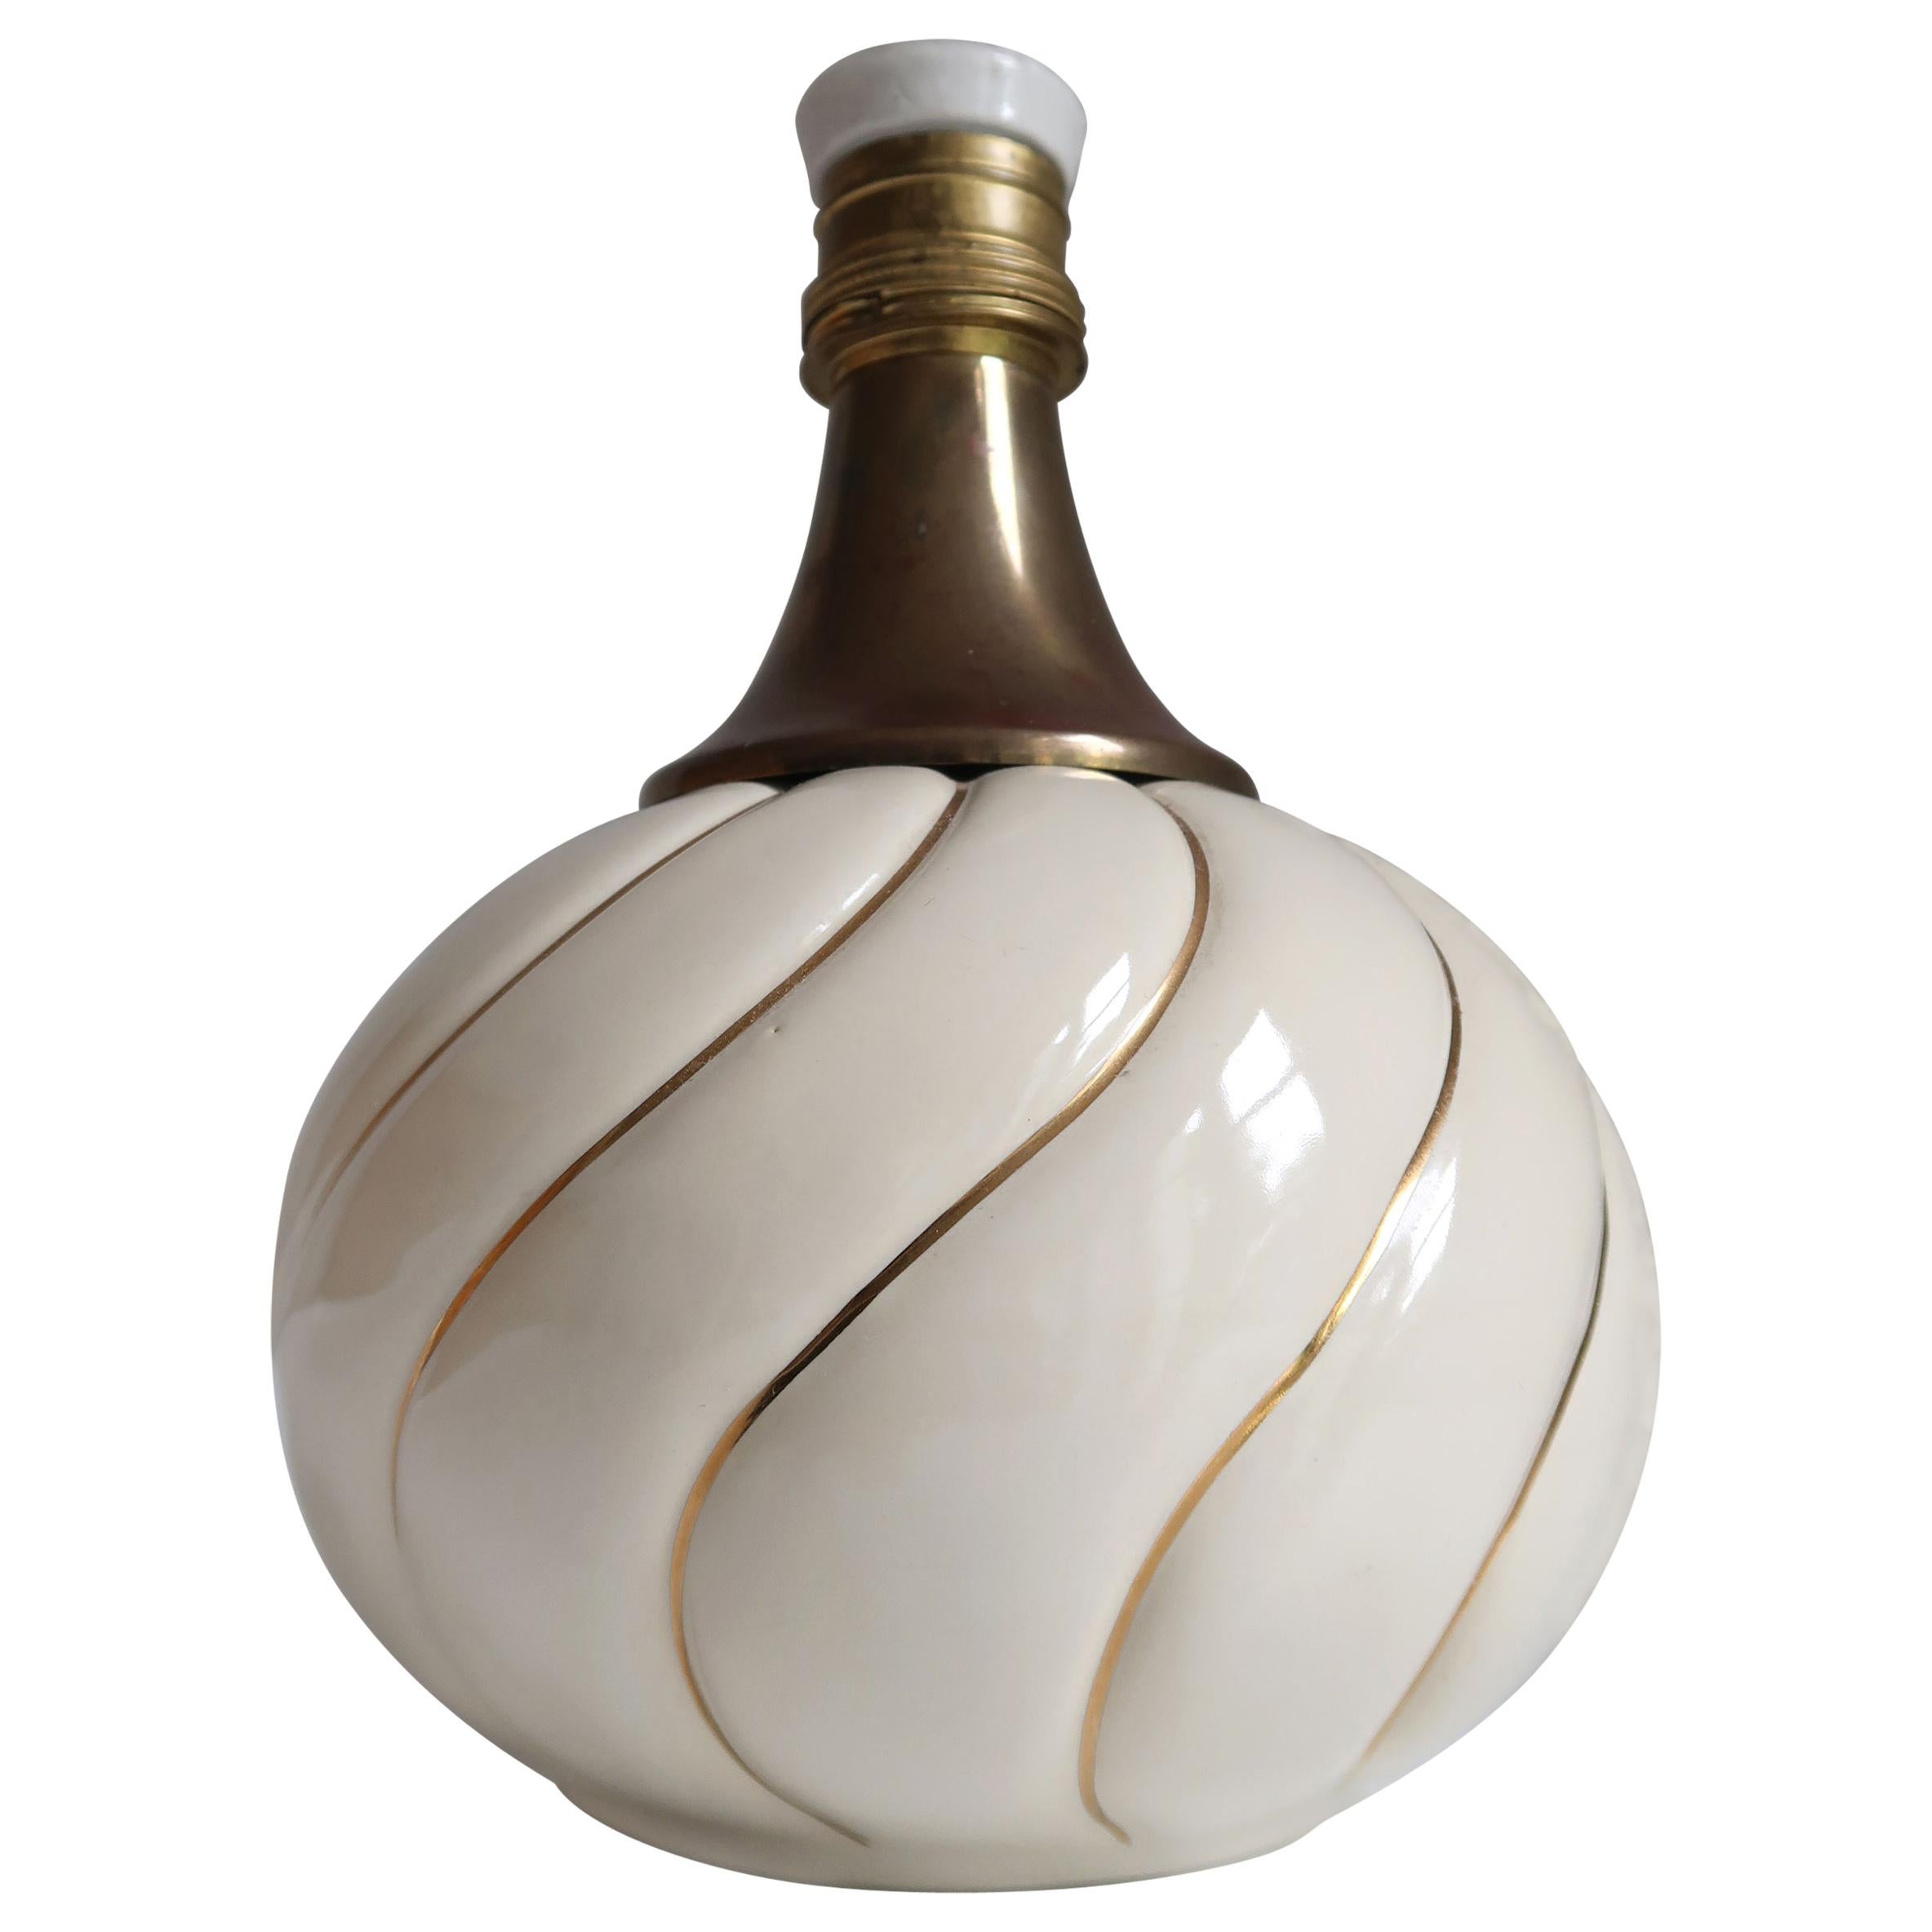 Vintage Tommaso Barbi Style Ceramic Cream, Gold, Brass Table Lamp, 1970s